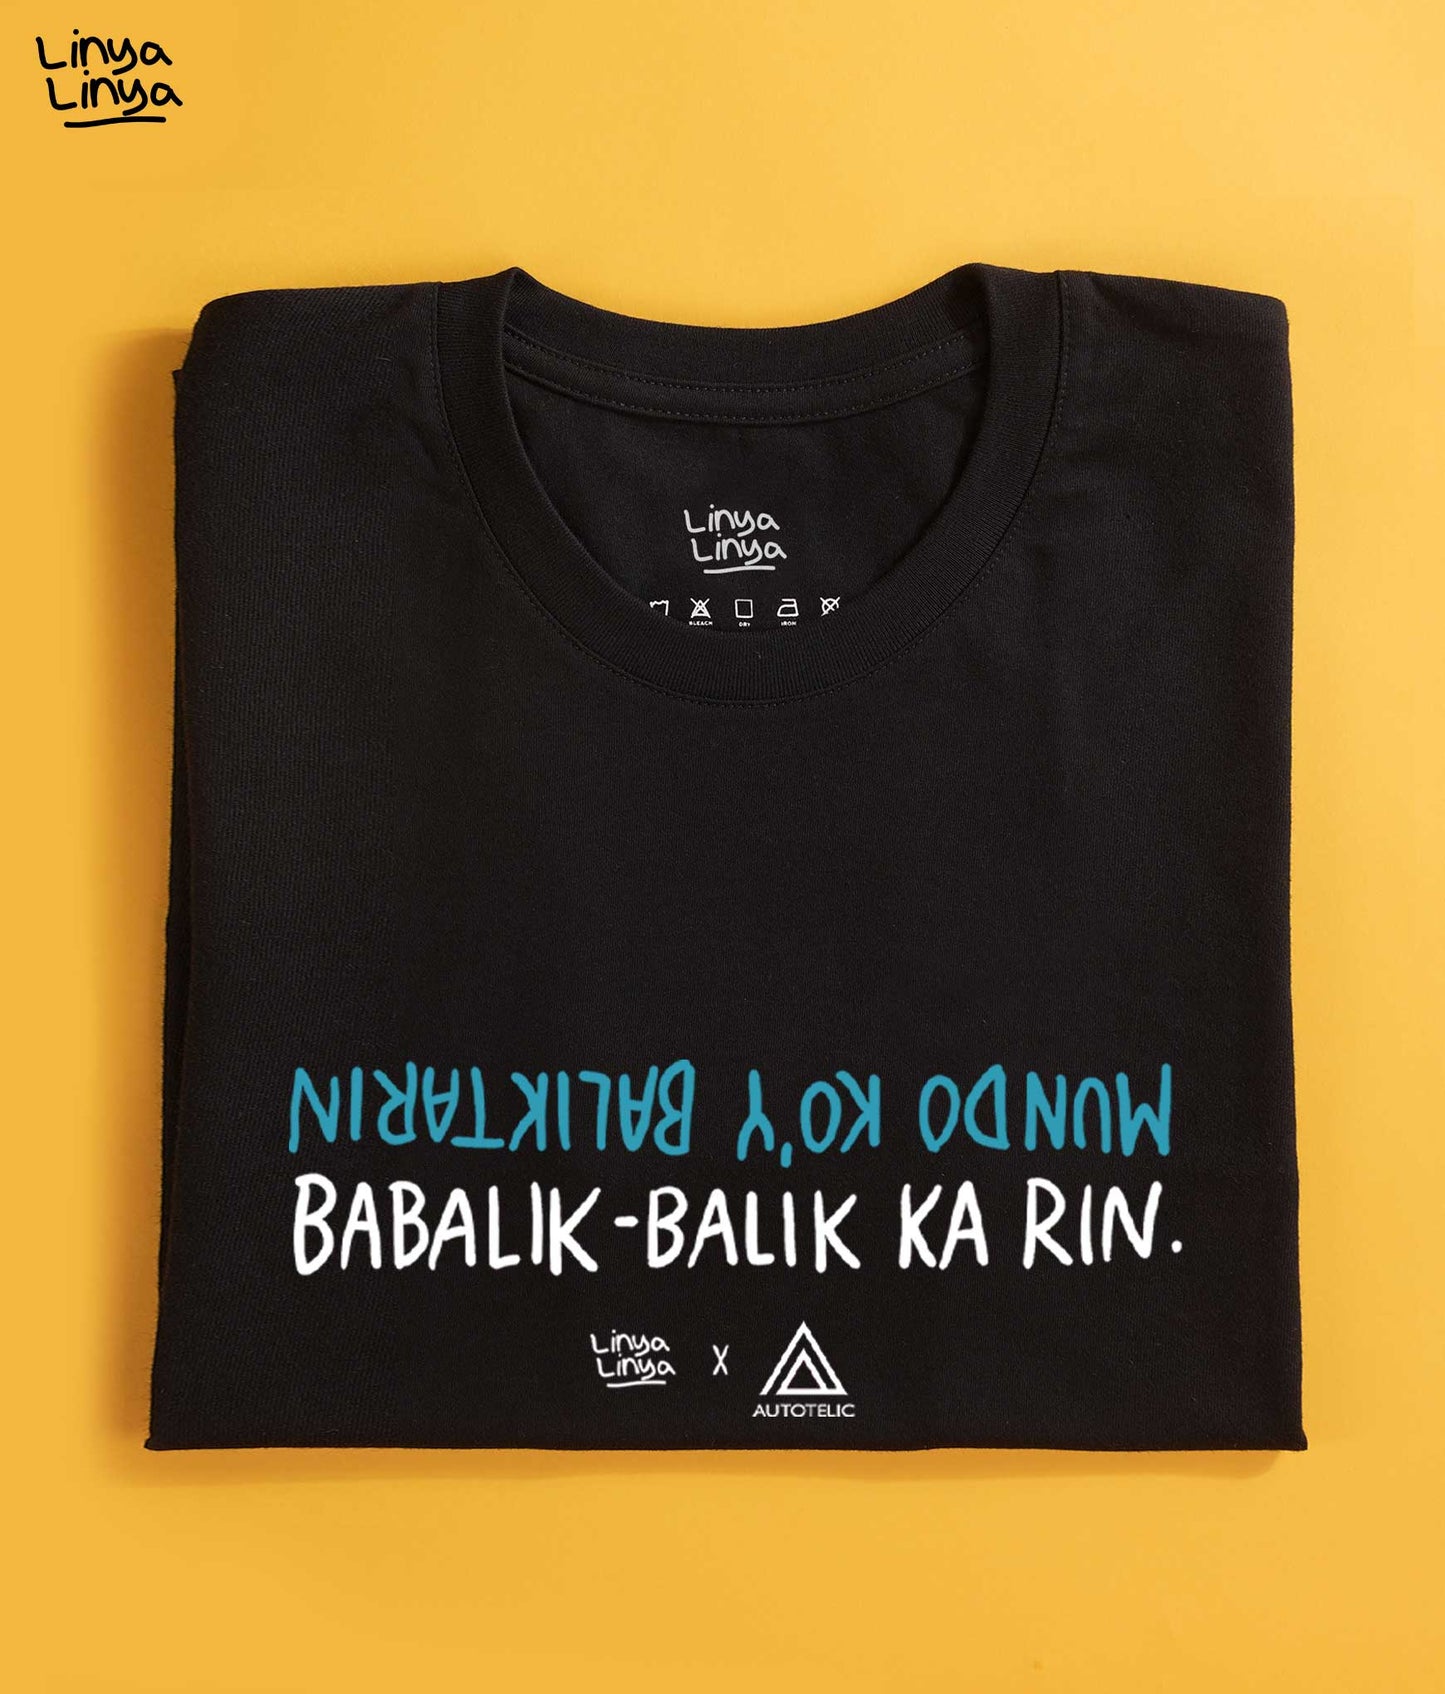 Linya-Linya x Autotelic Limited Edition - LANGUYIN Shirt: Mundo Ko’y Baliktarin, Babalik-Balik Ka Rin (Black)